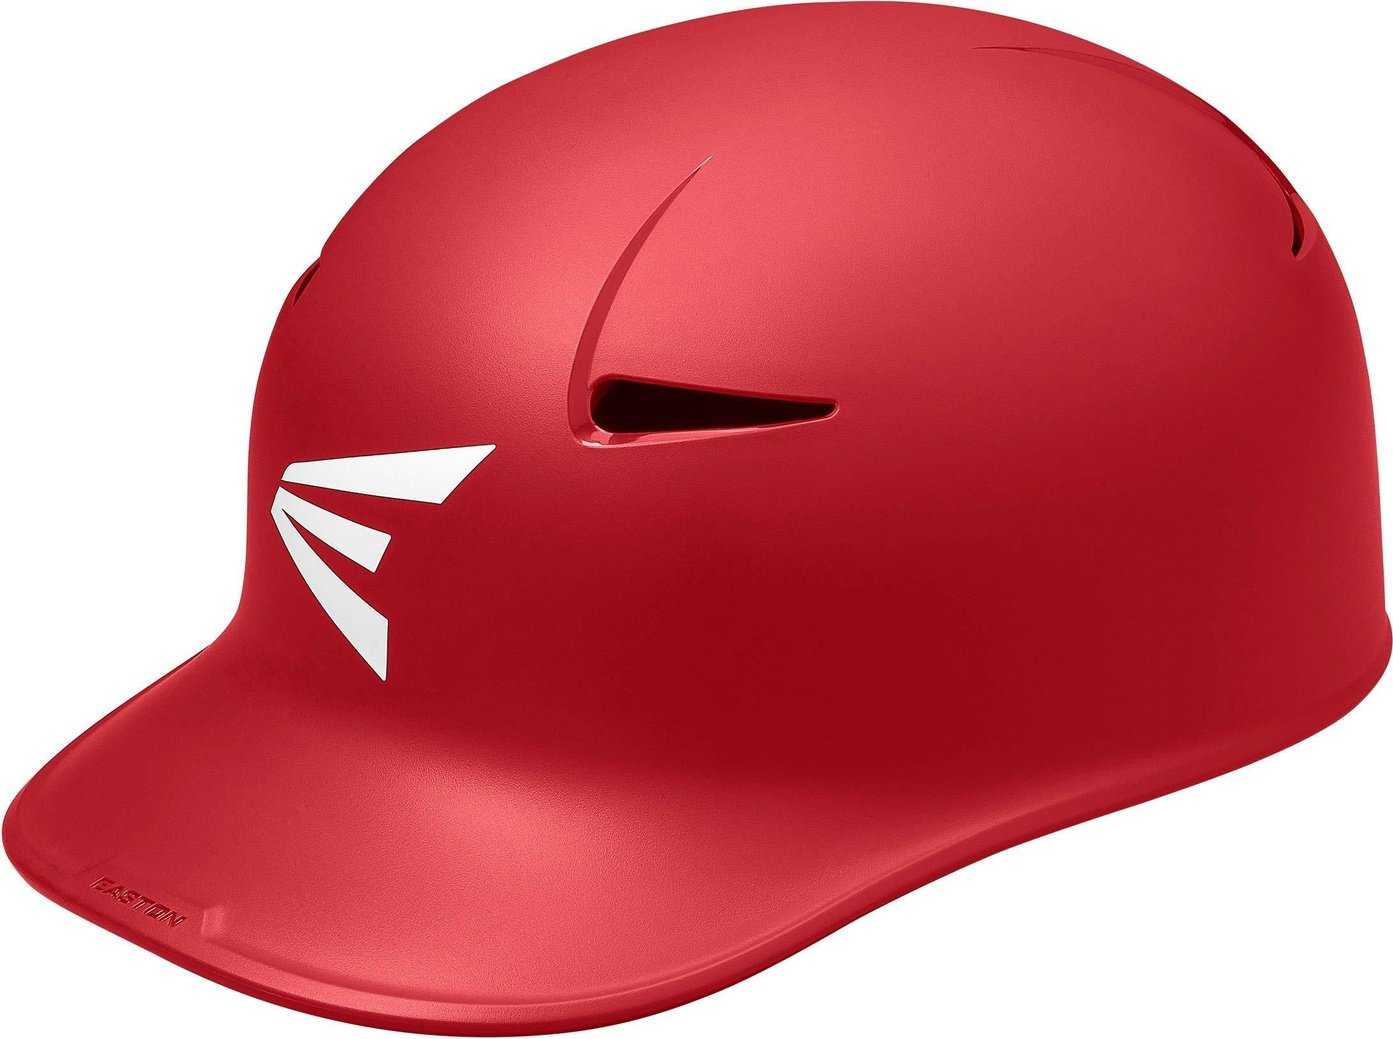 Easton Pro X Catcher / Coach Skull Cap - Red - HIT A Double